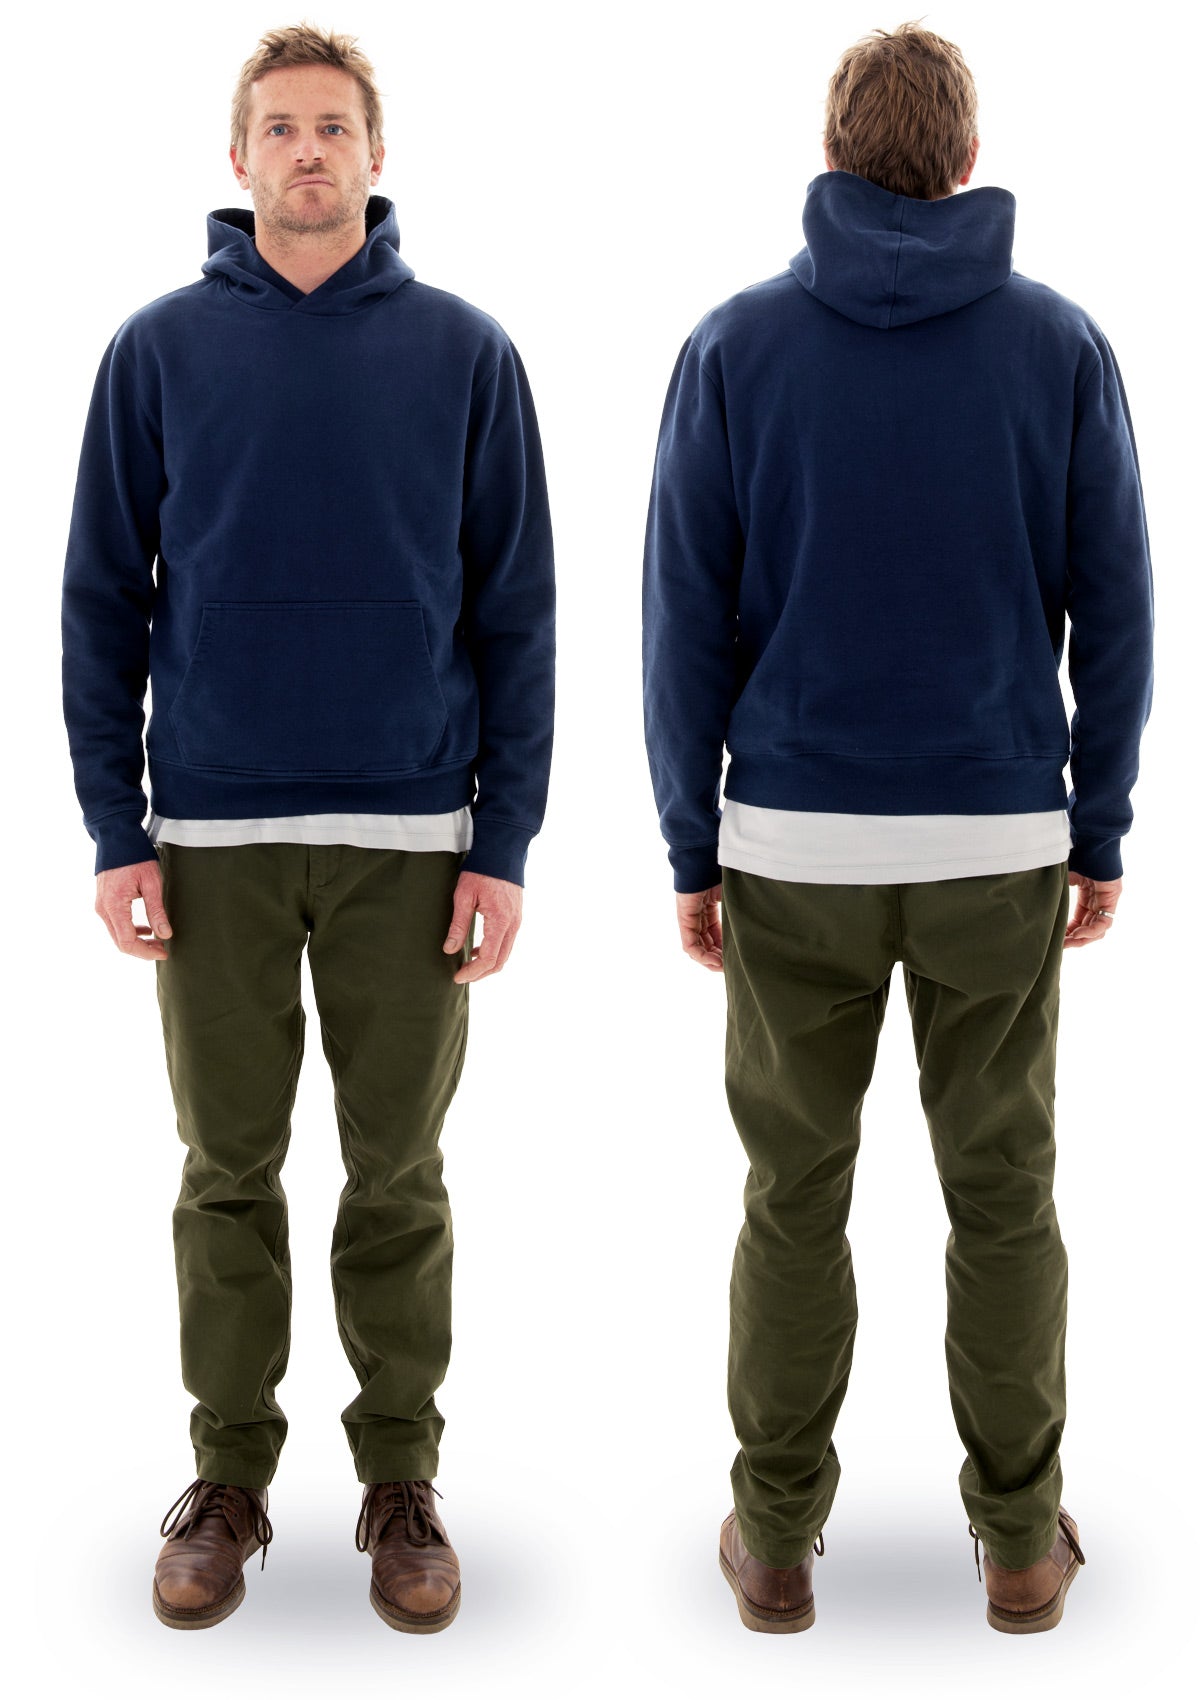 needessentials organic cotton hoodie jumper navy laurie towner